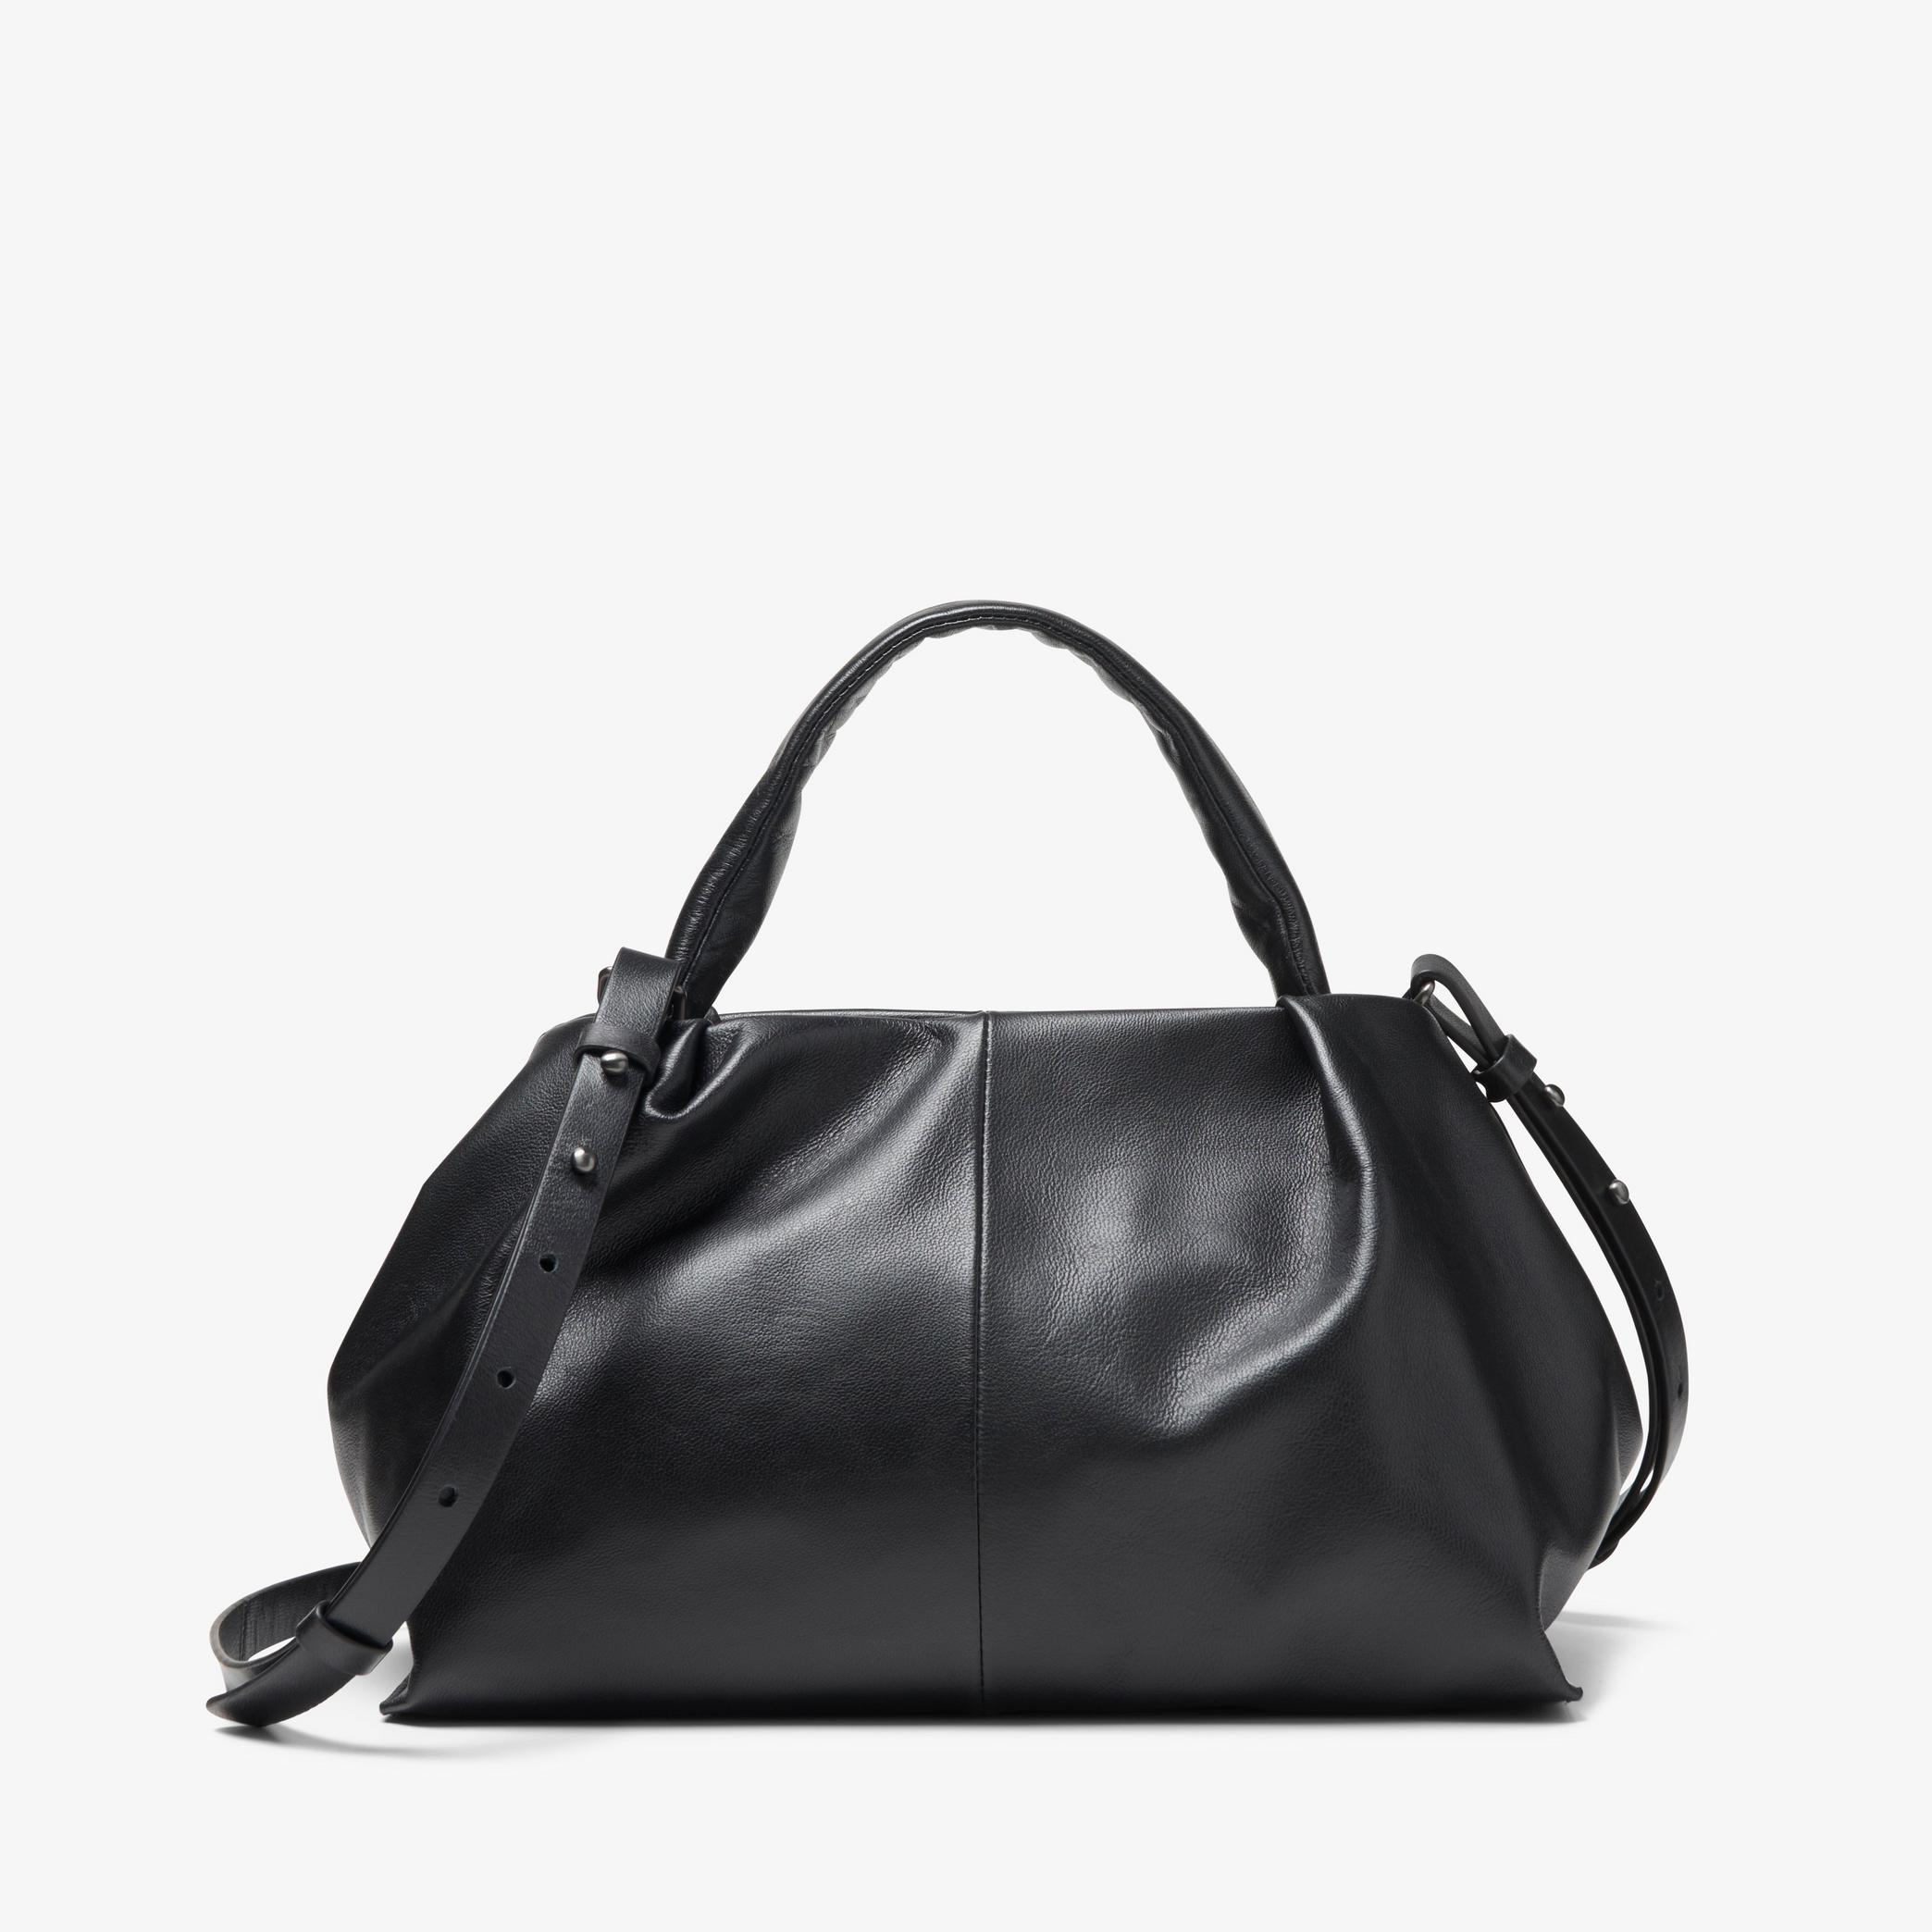 Raelyn Cross Black Leather Across Body Bag, view 1 of 4